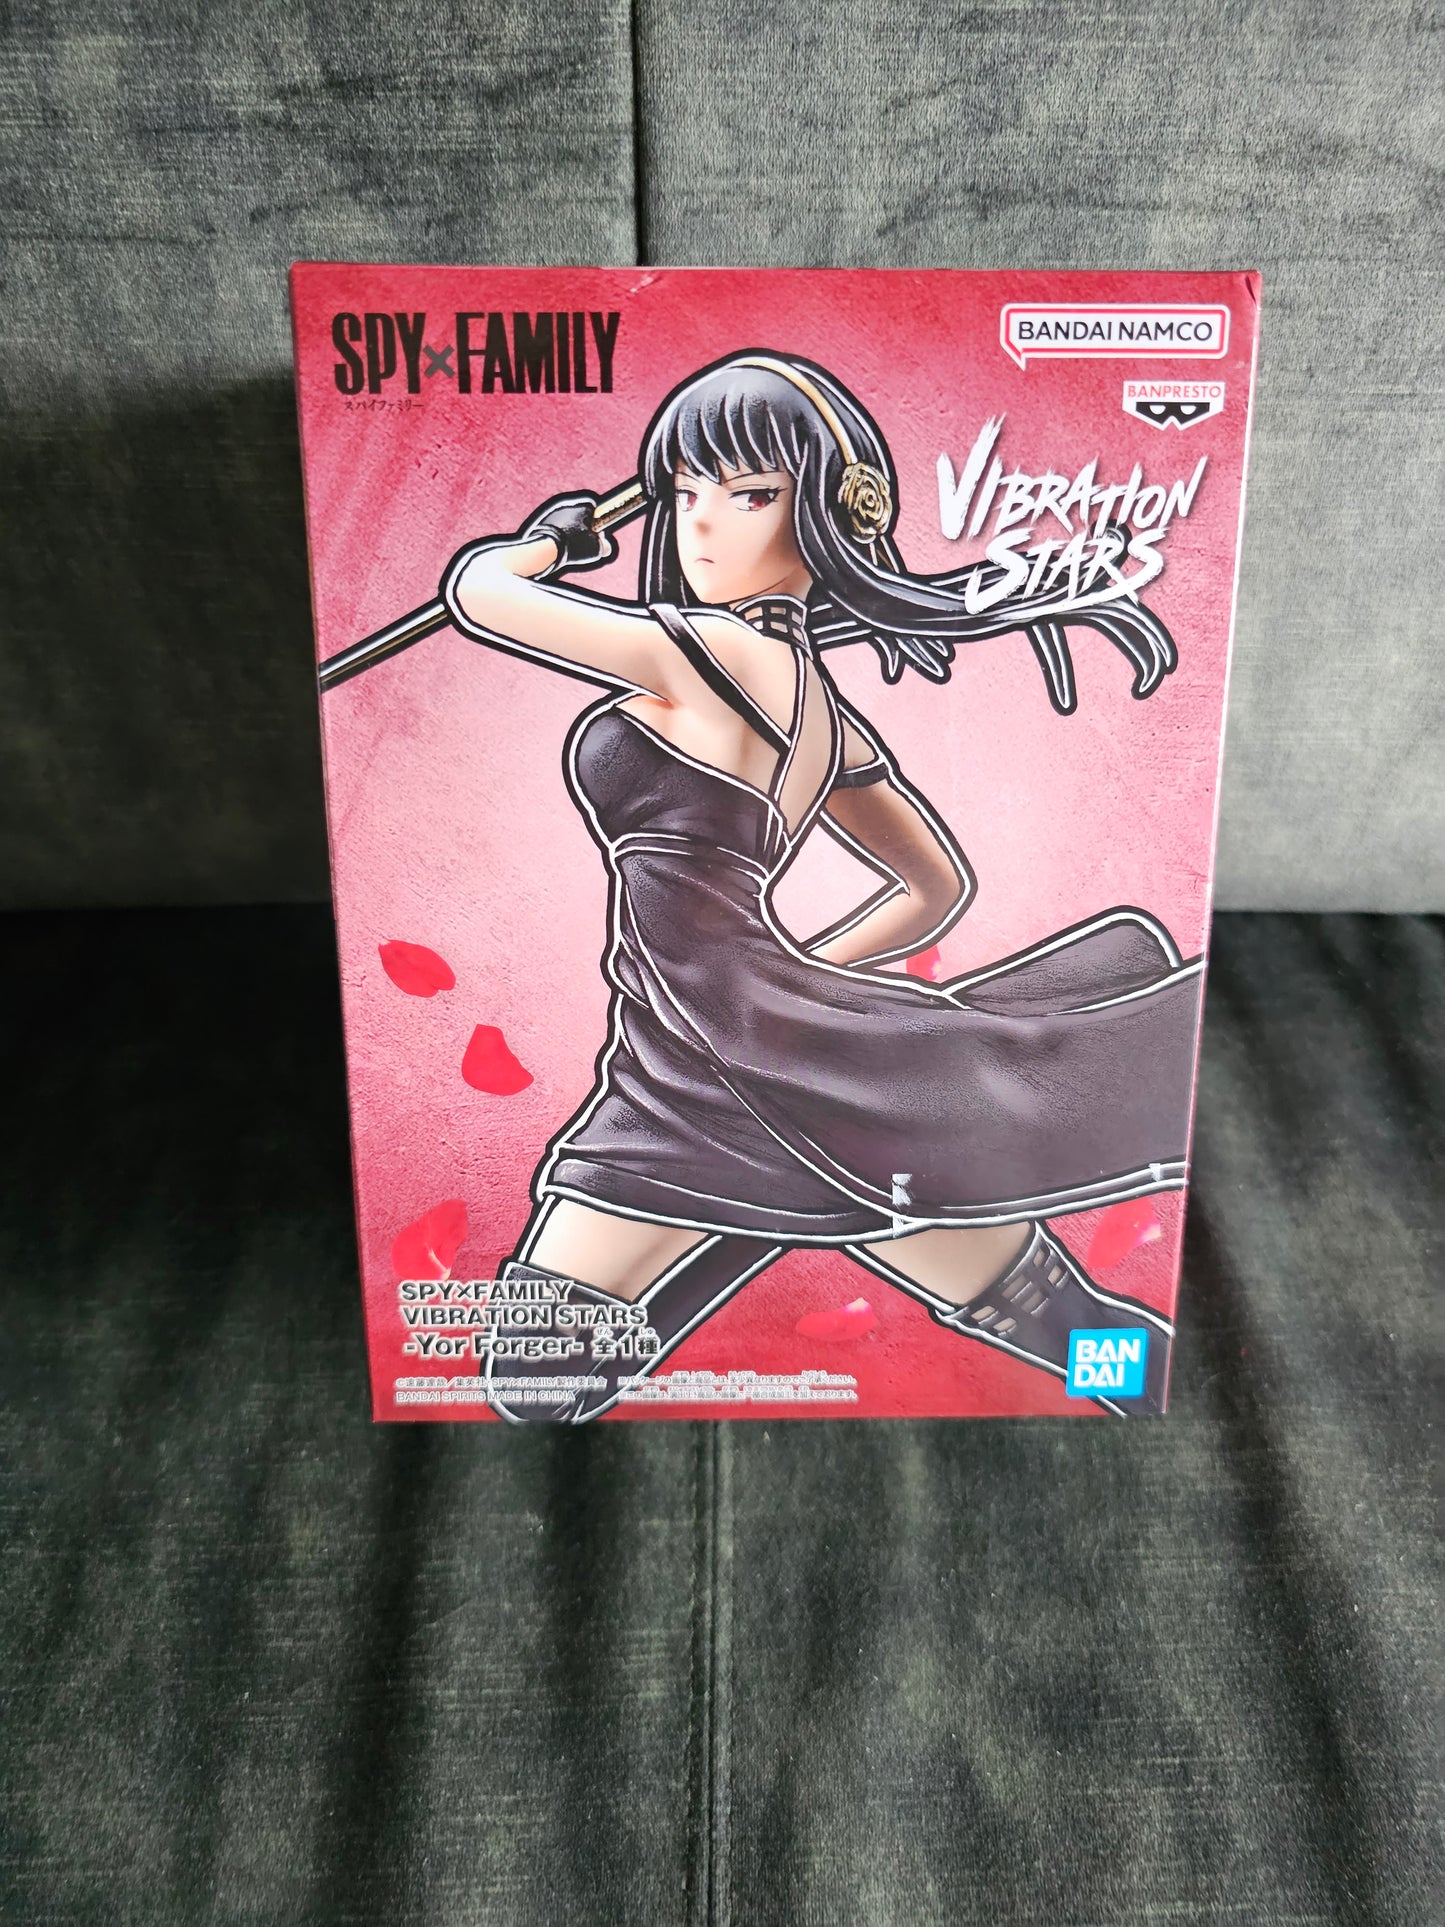 Spy x Family - Yor Forger Vibration Stars - Bandai Spirits